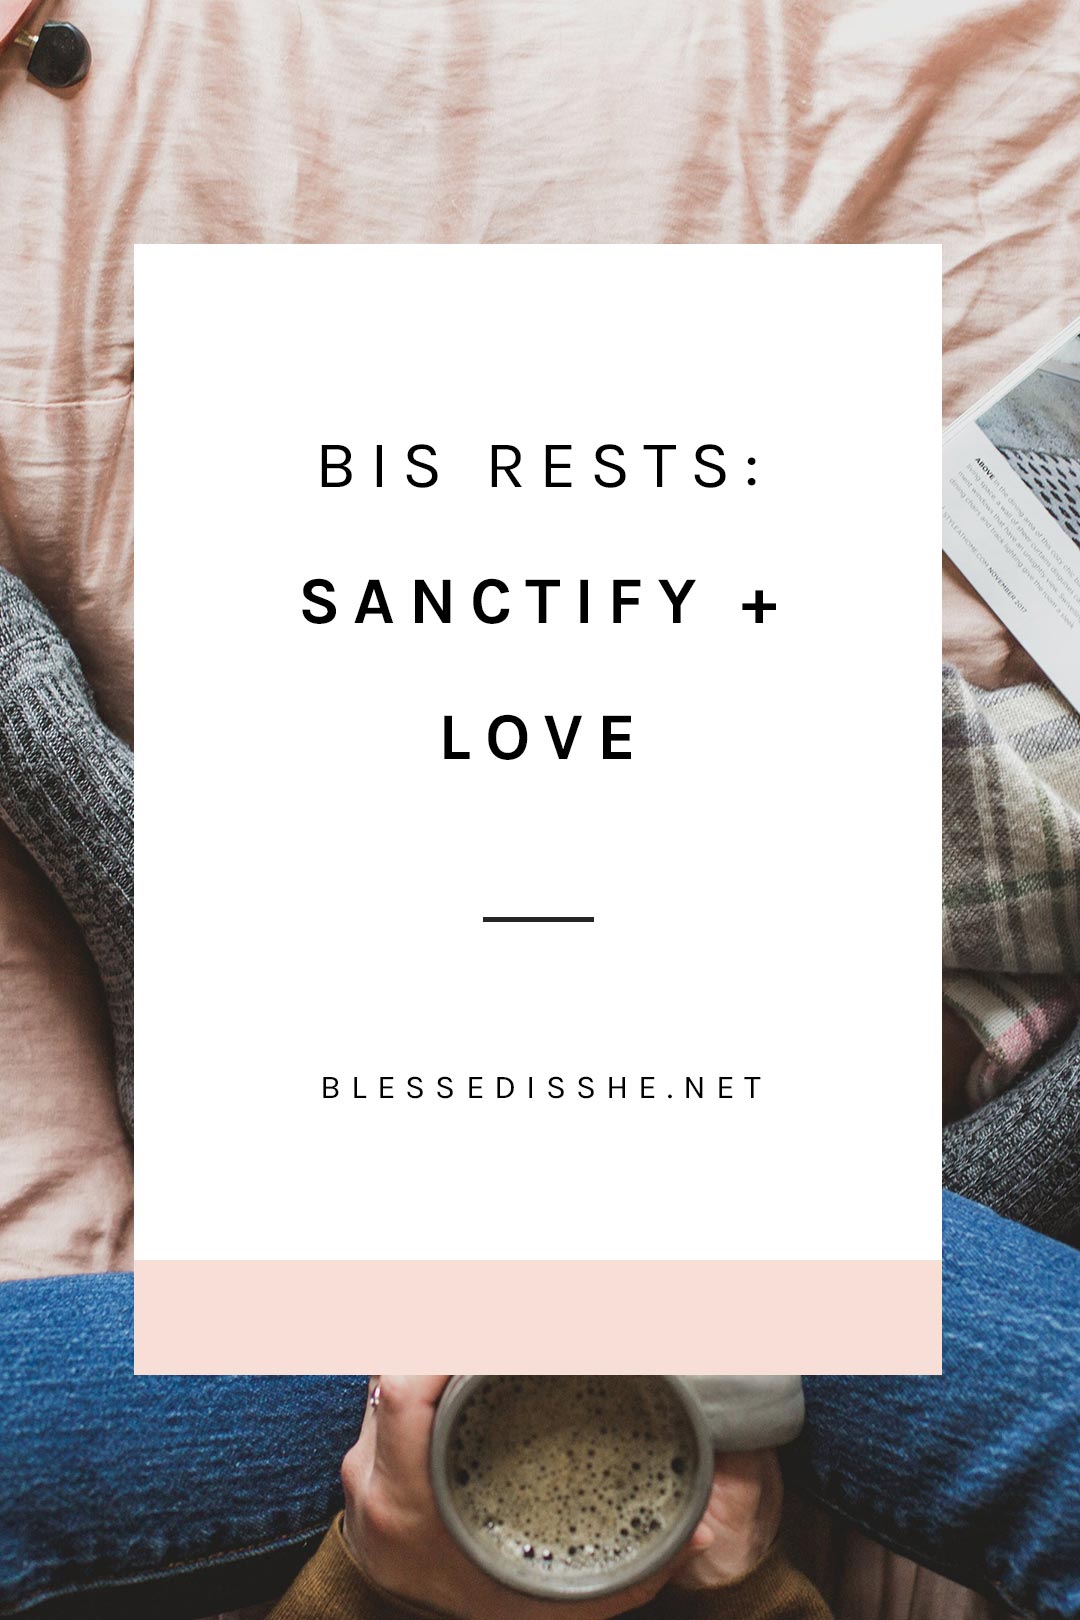 bis rests sanctify + love